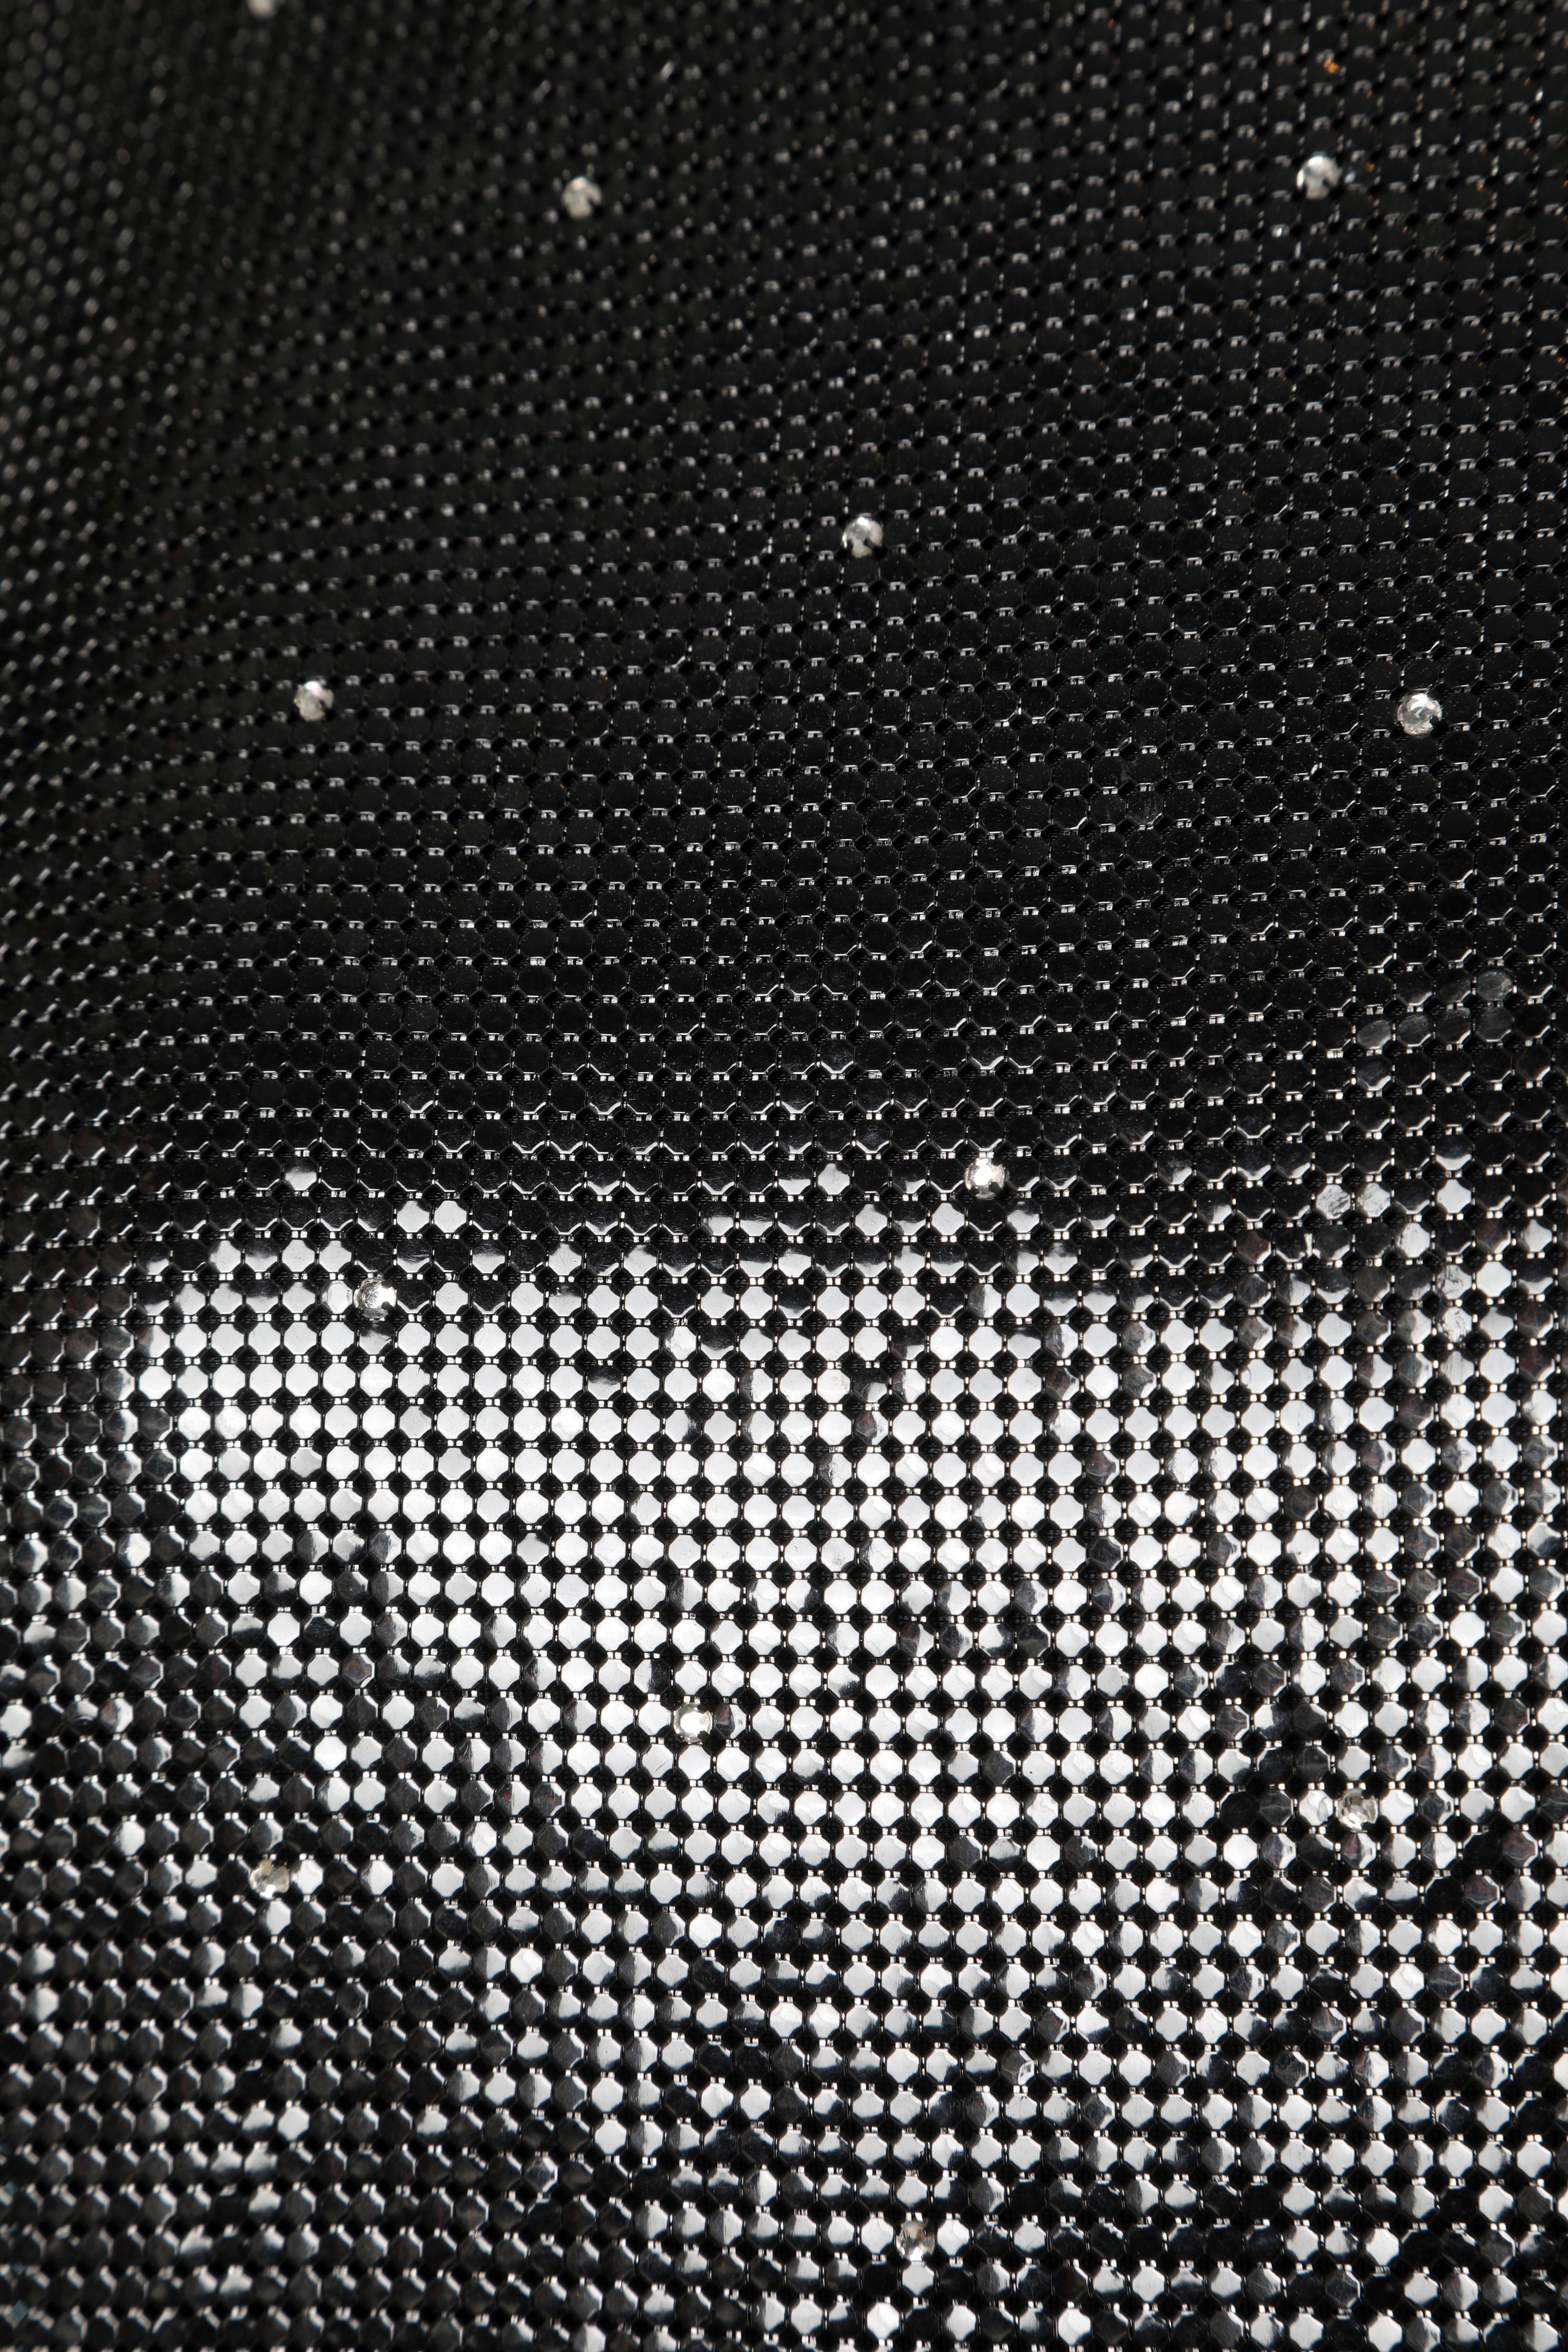 Dress in black metallic mesh and rhinestones. Back zip. Gianni Versace Sera label.
Size: 38/40 French
